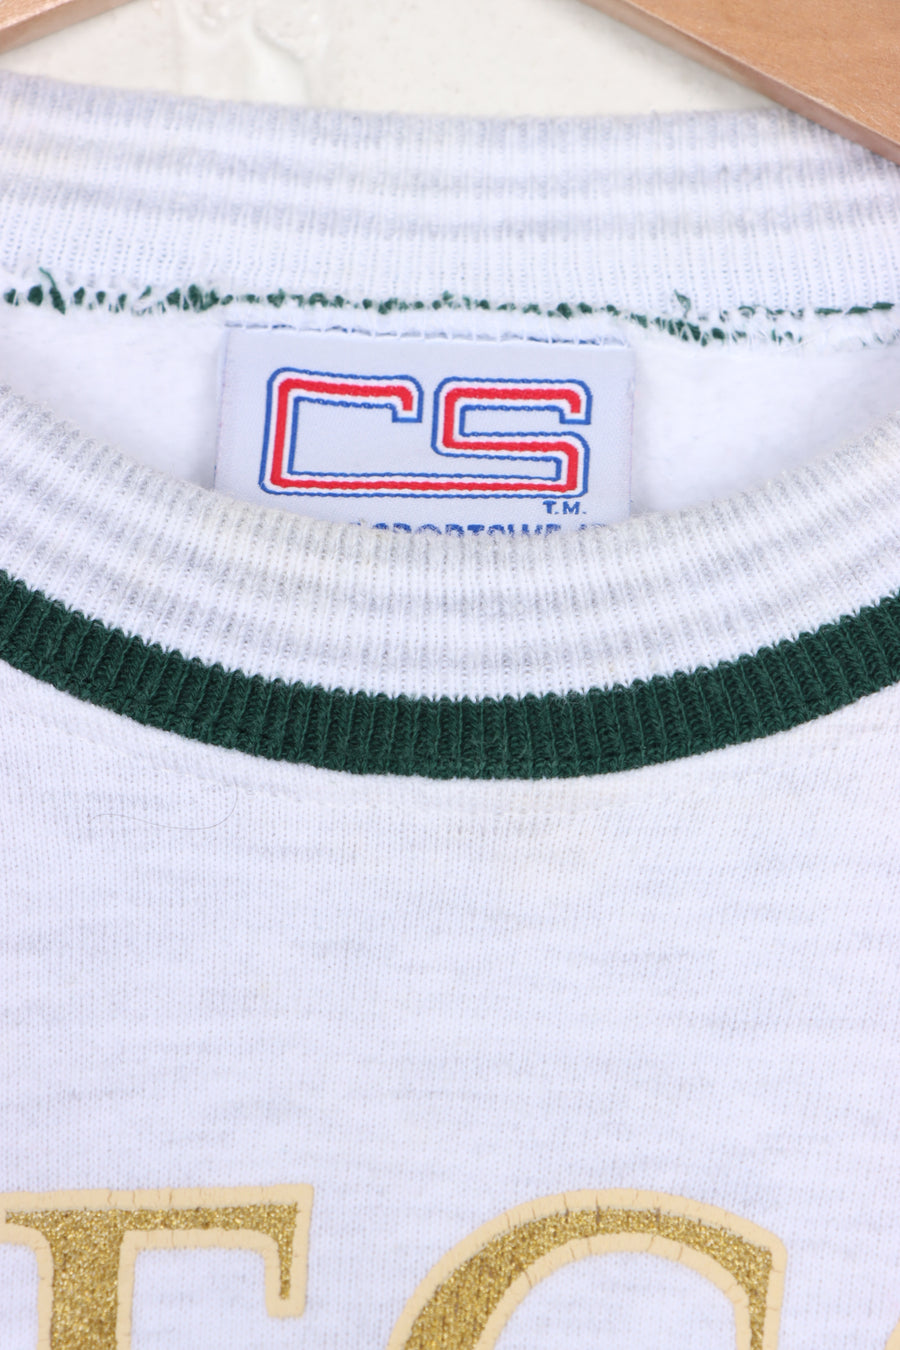 Oregon Ducks 1991 Paisley Shield Spell Out Ringer Sweatshirt USA Made (S-M)